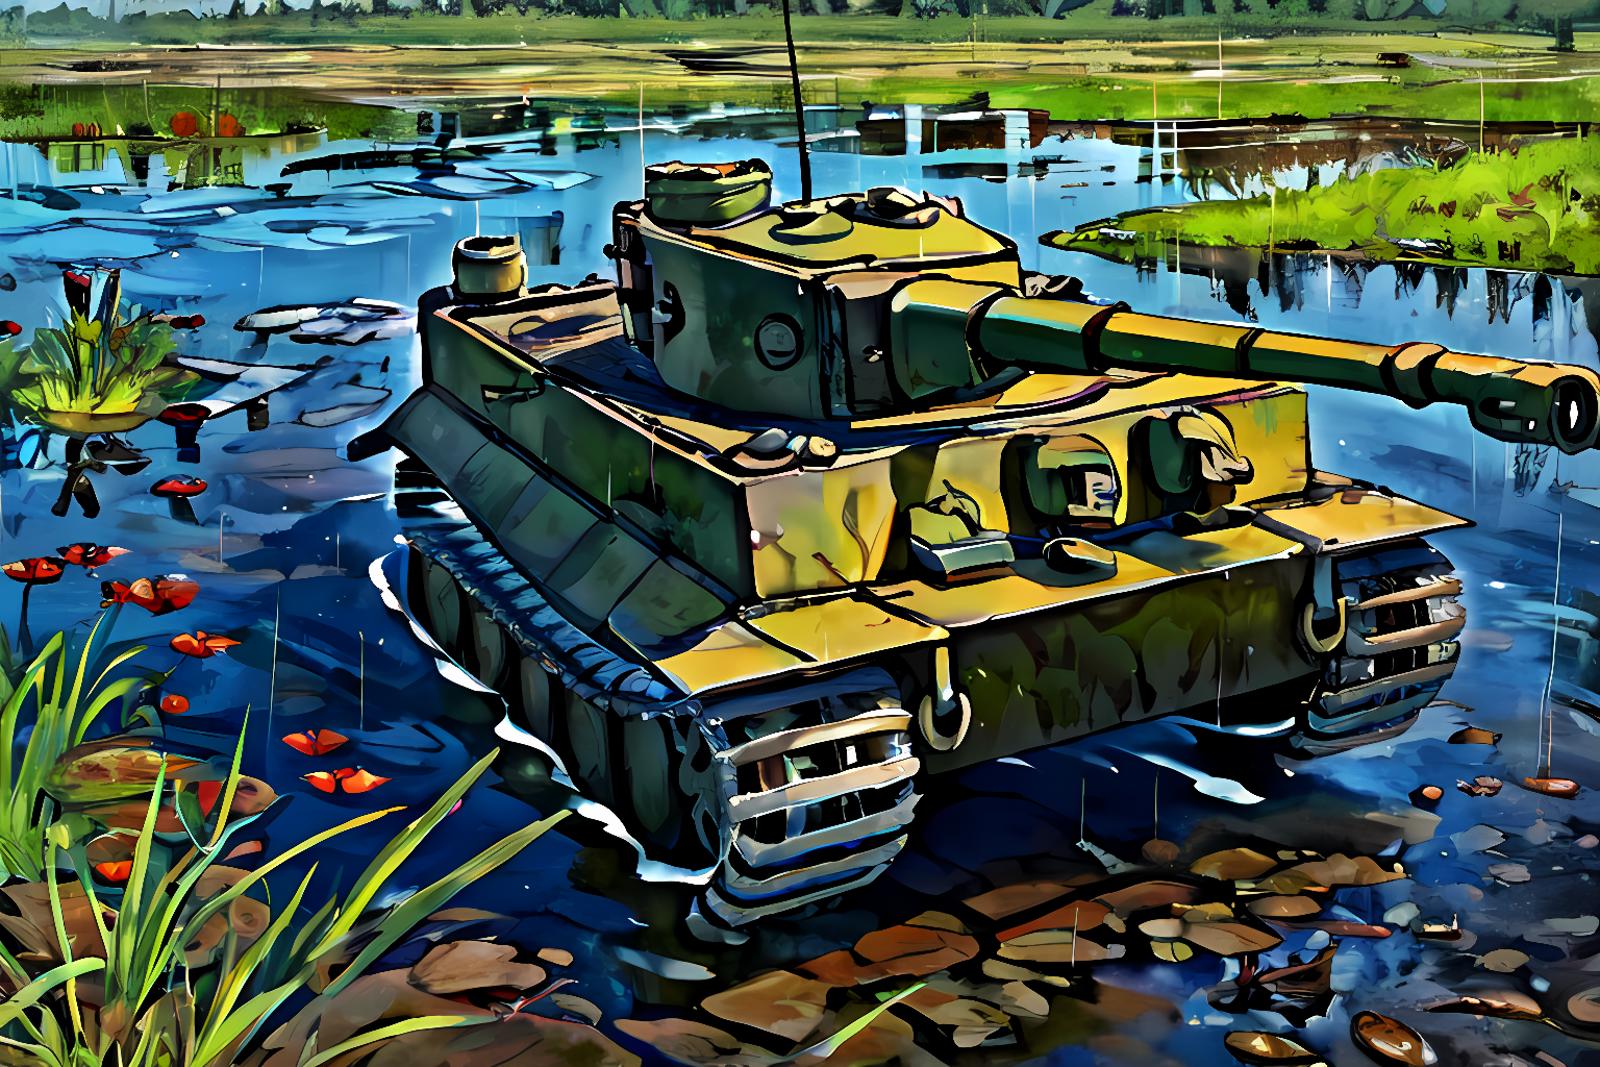 Tiger Tank image by MajMorse